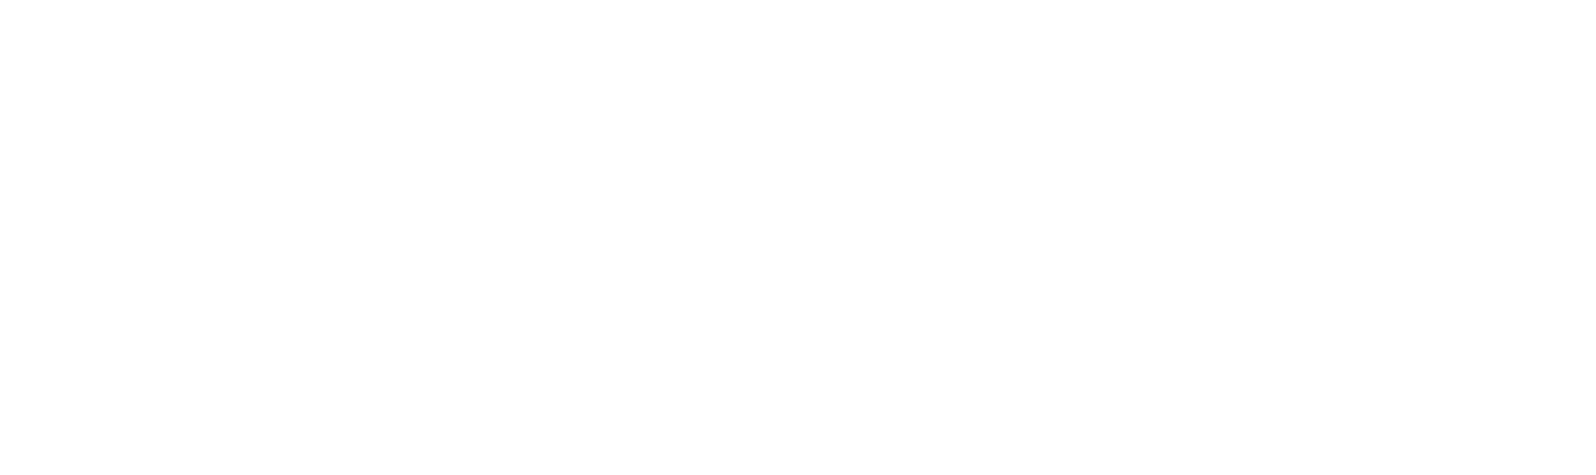 Mizuho Financial Group
 logo large for dark backgrounds (transparent PNG)